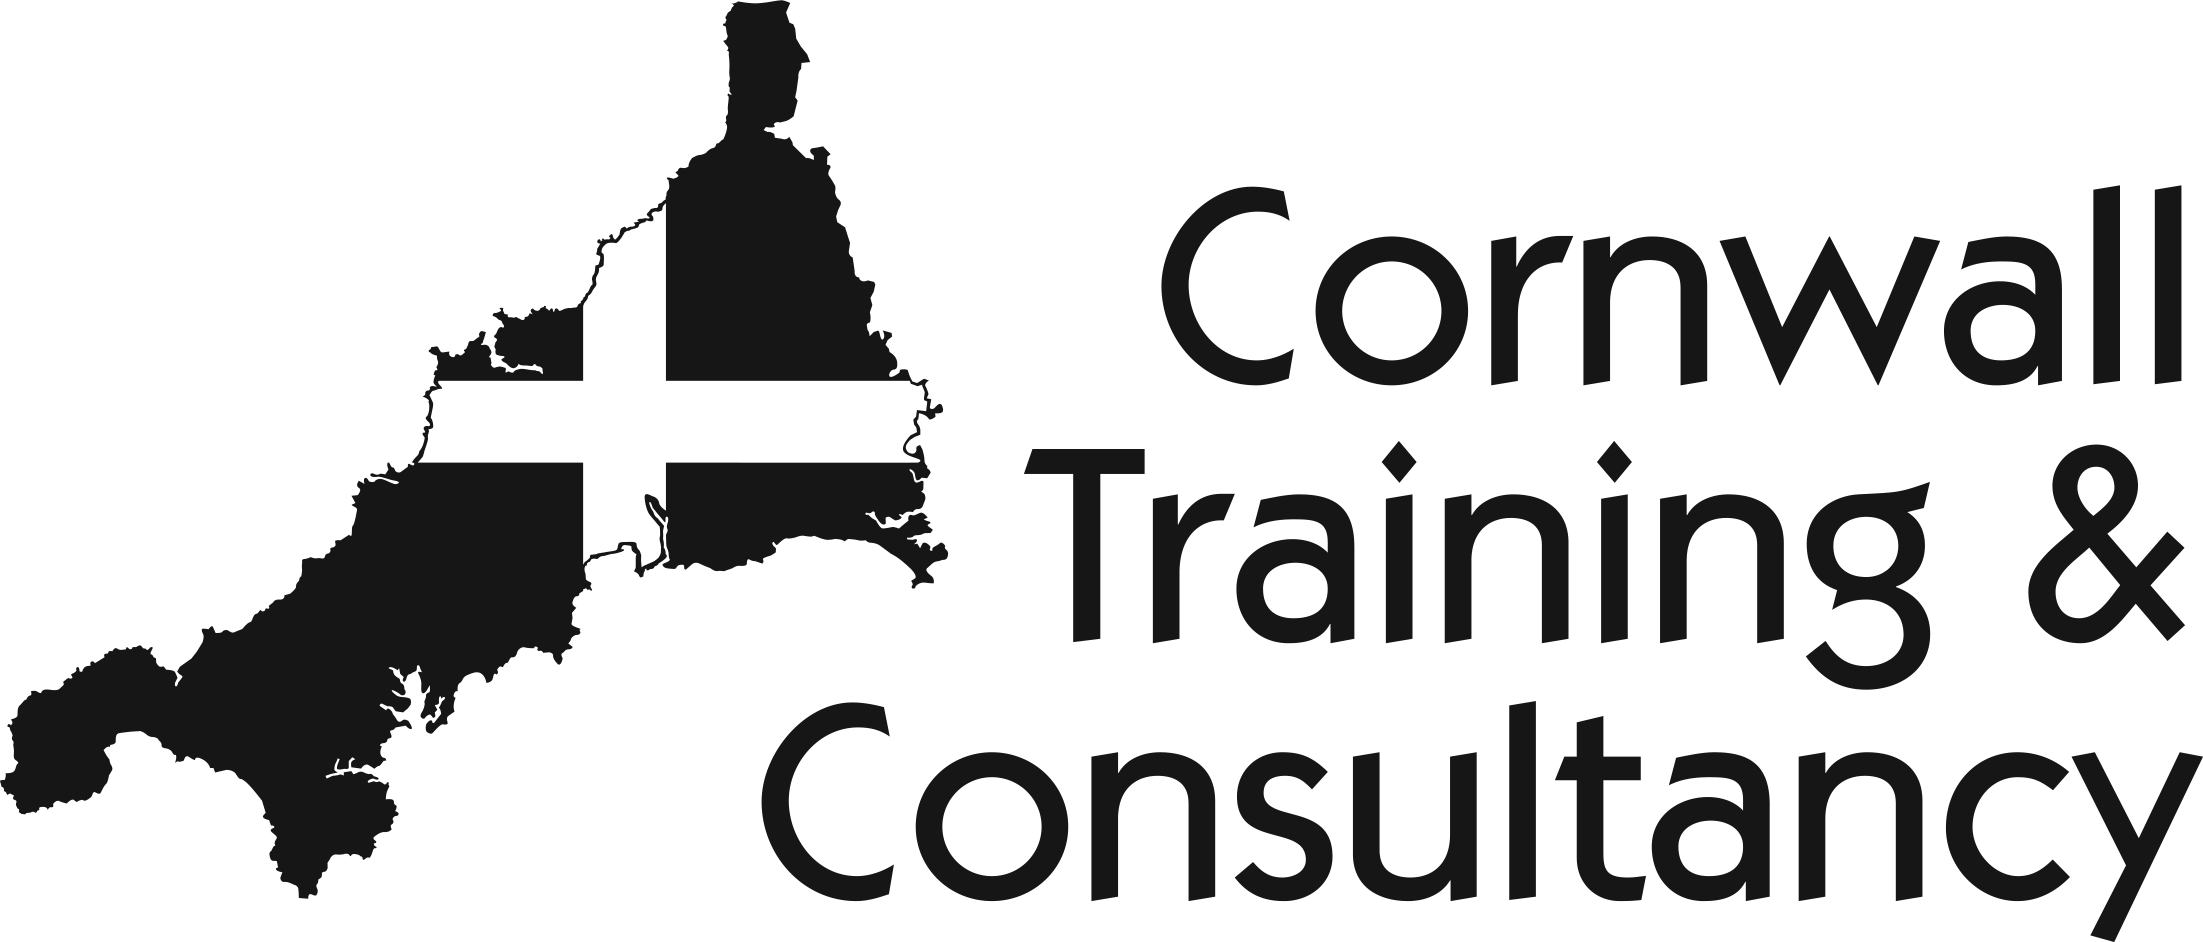  Cornwall Training & Consultancy